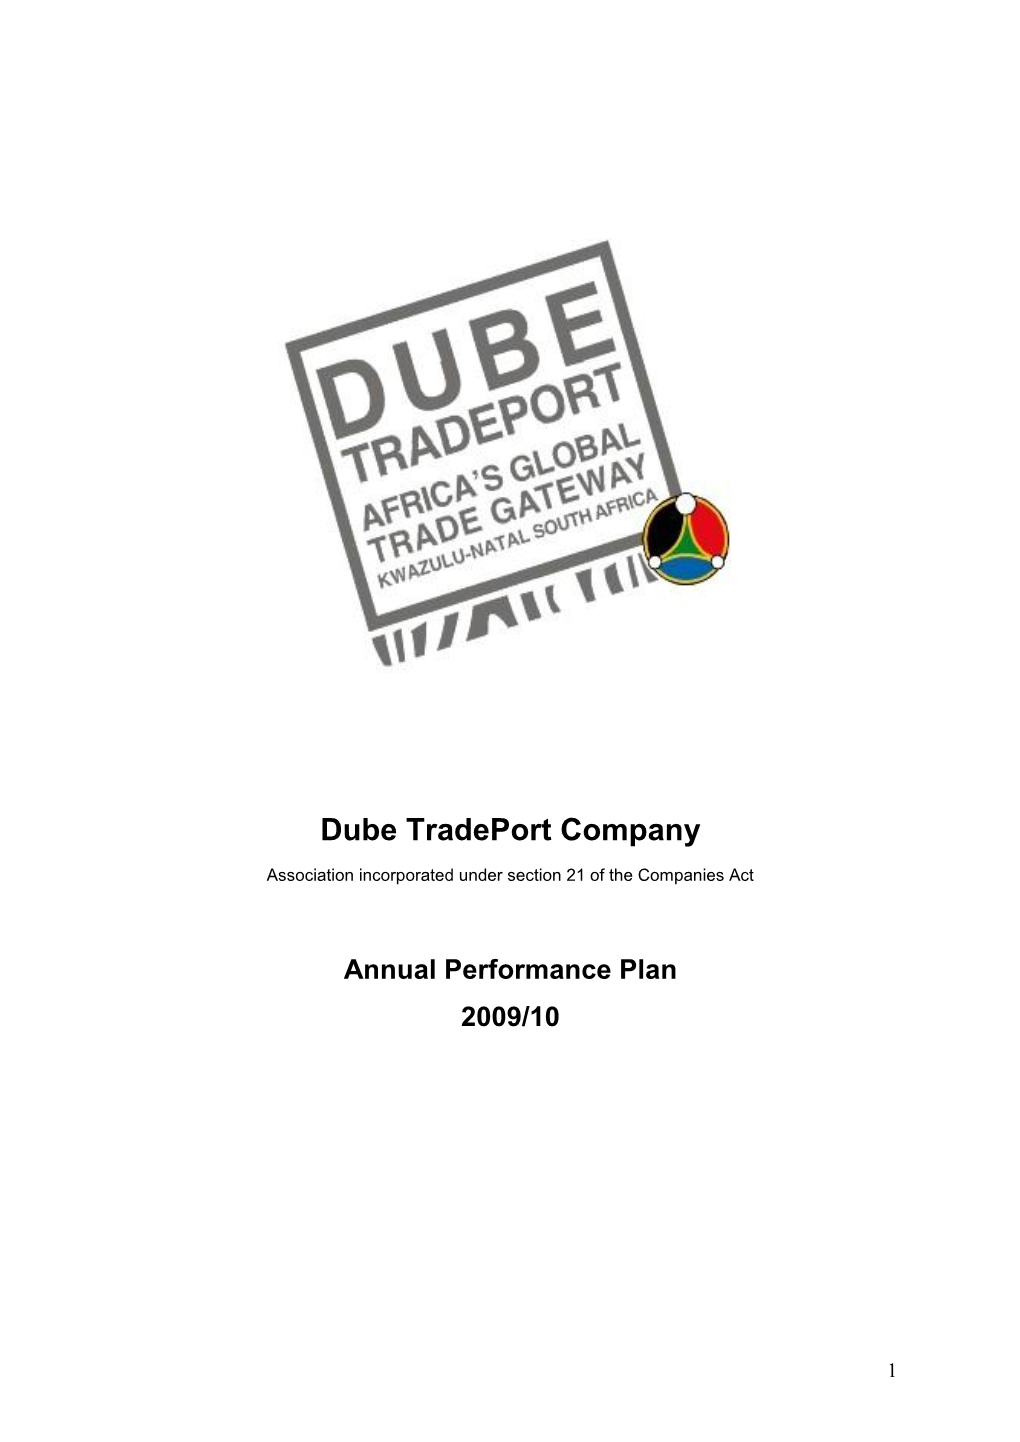 Annual Performance Plan 2009/10